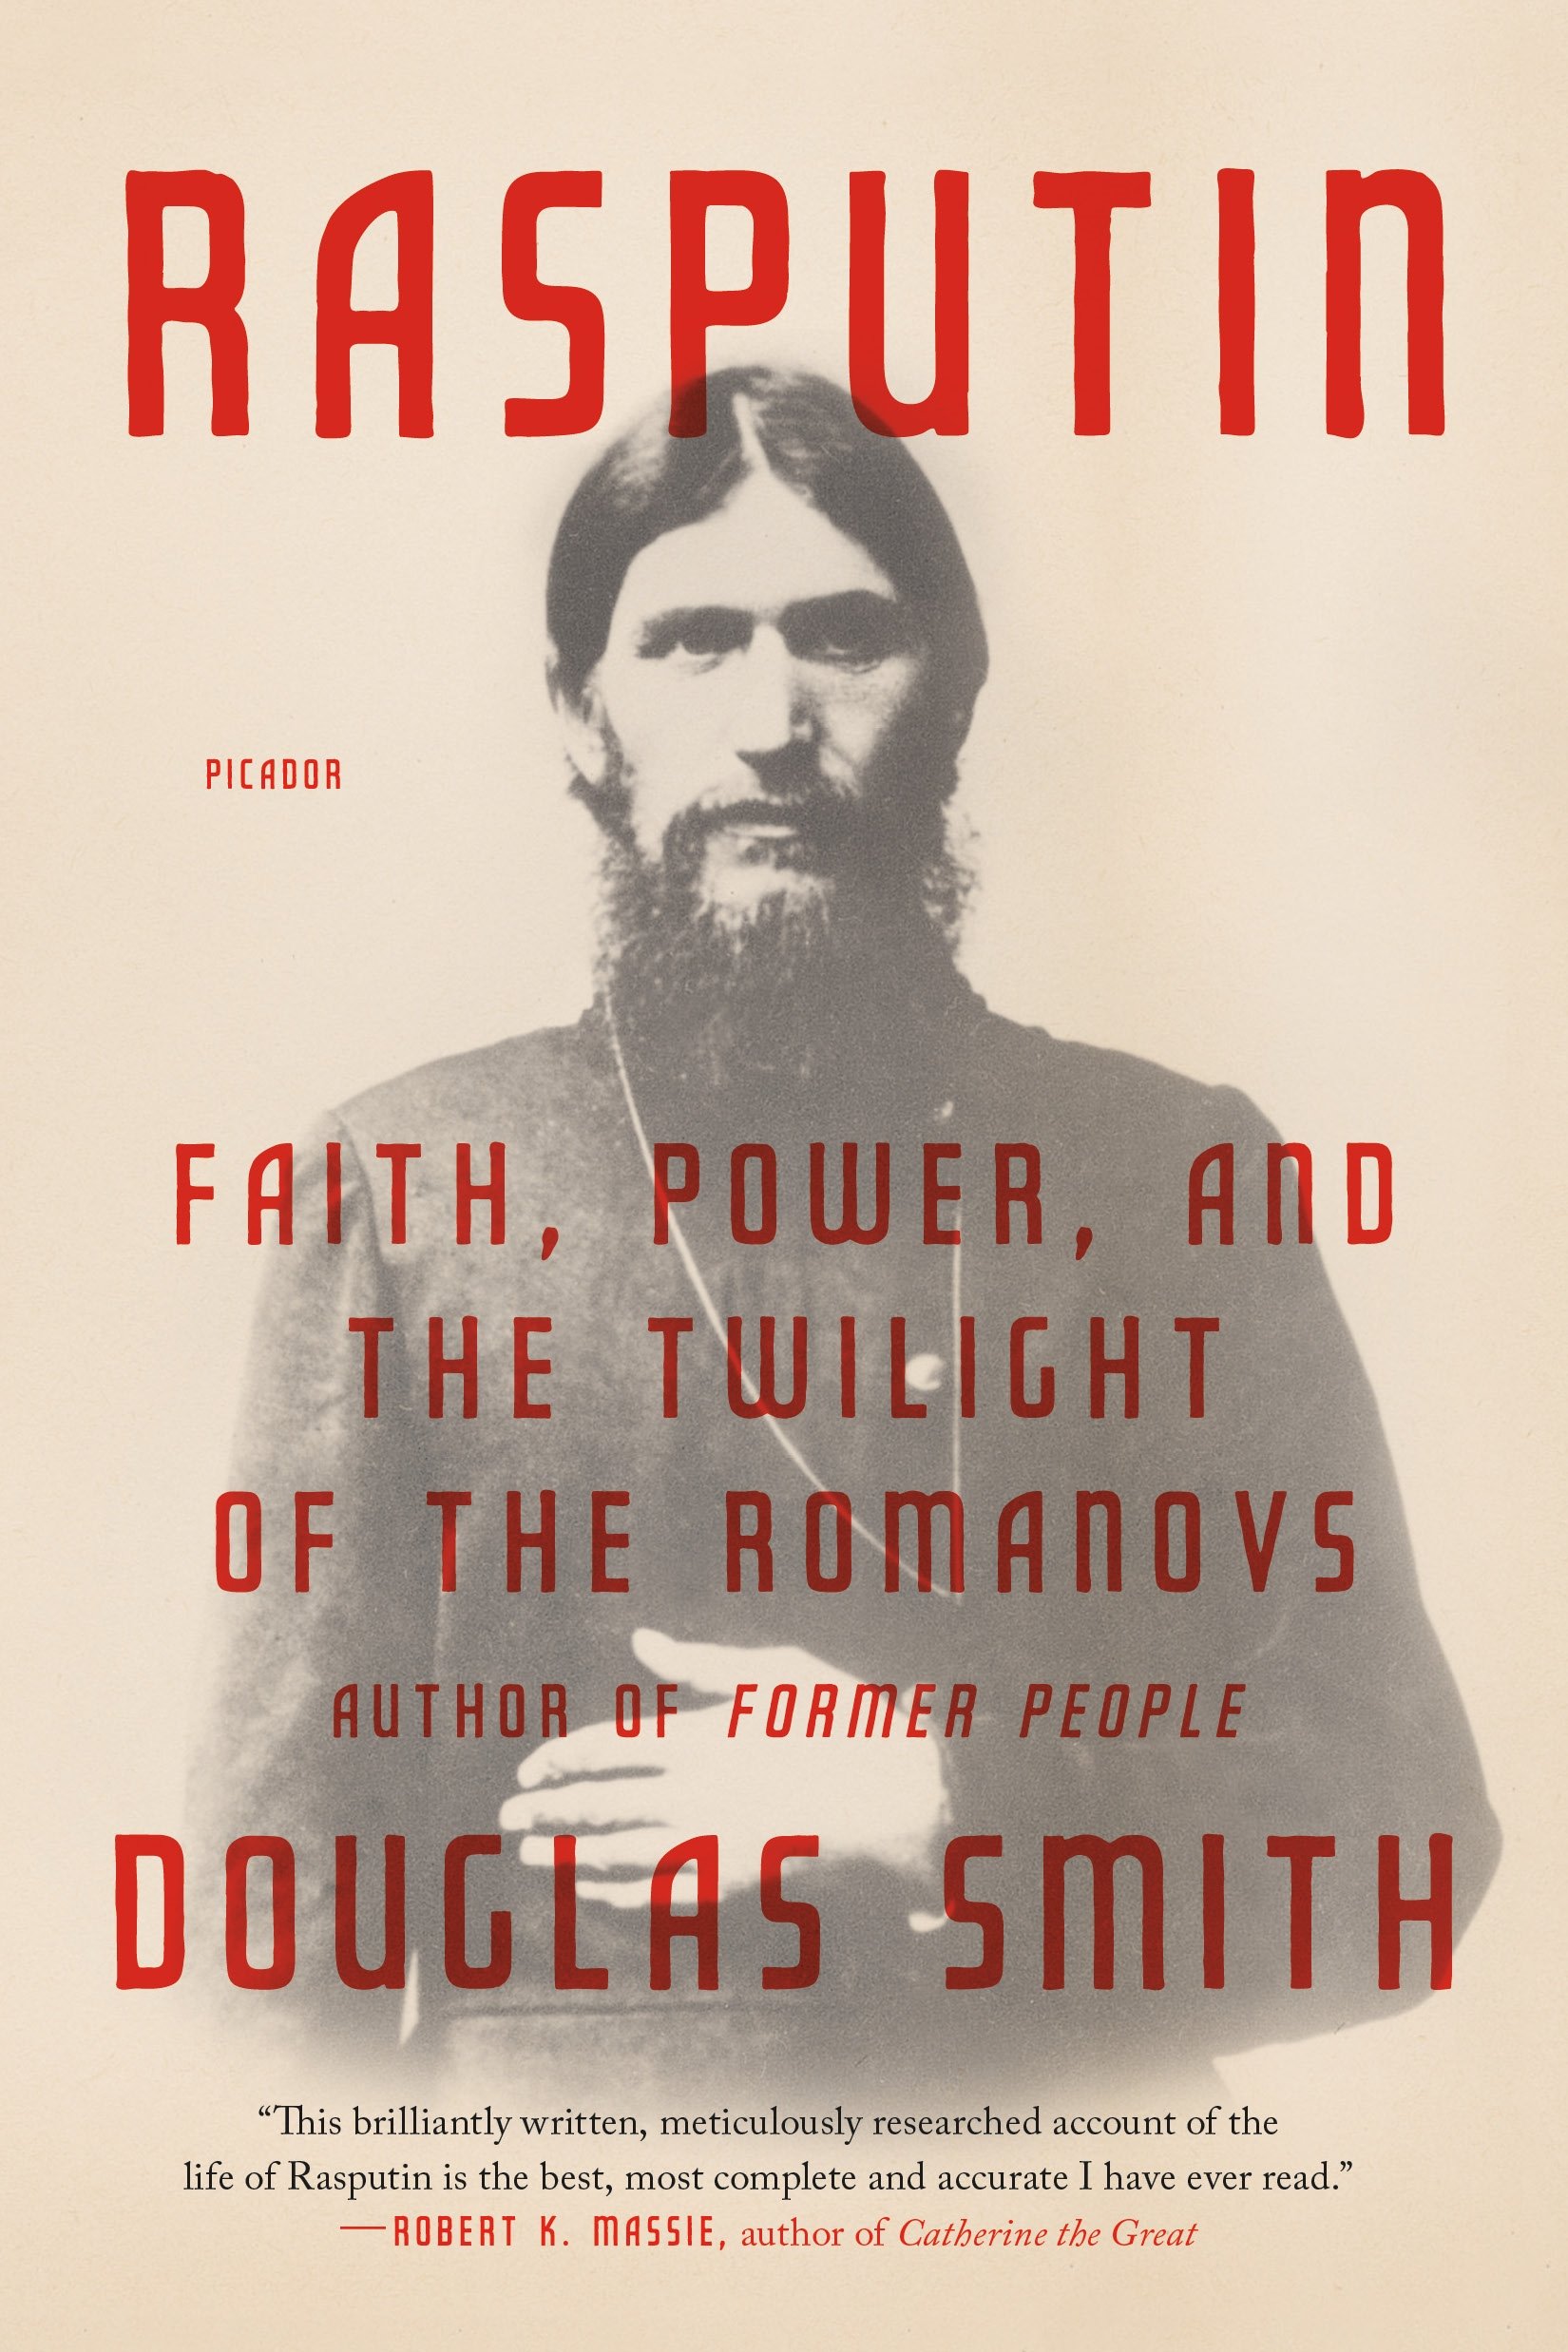 Rasputin reviewed